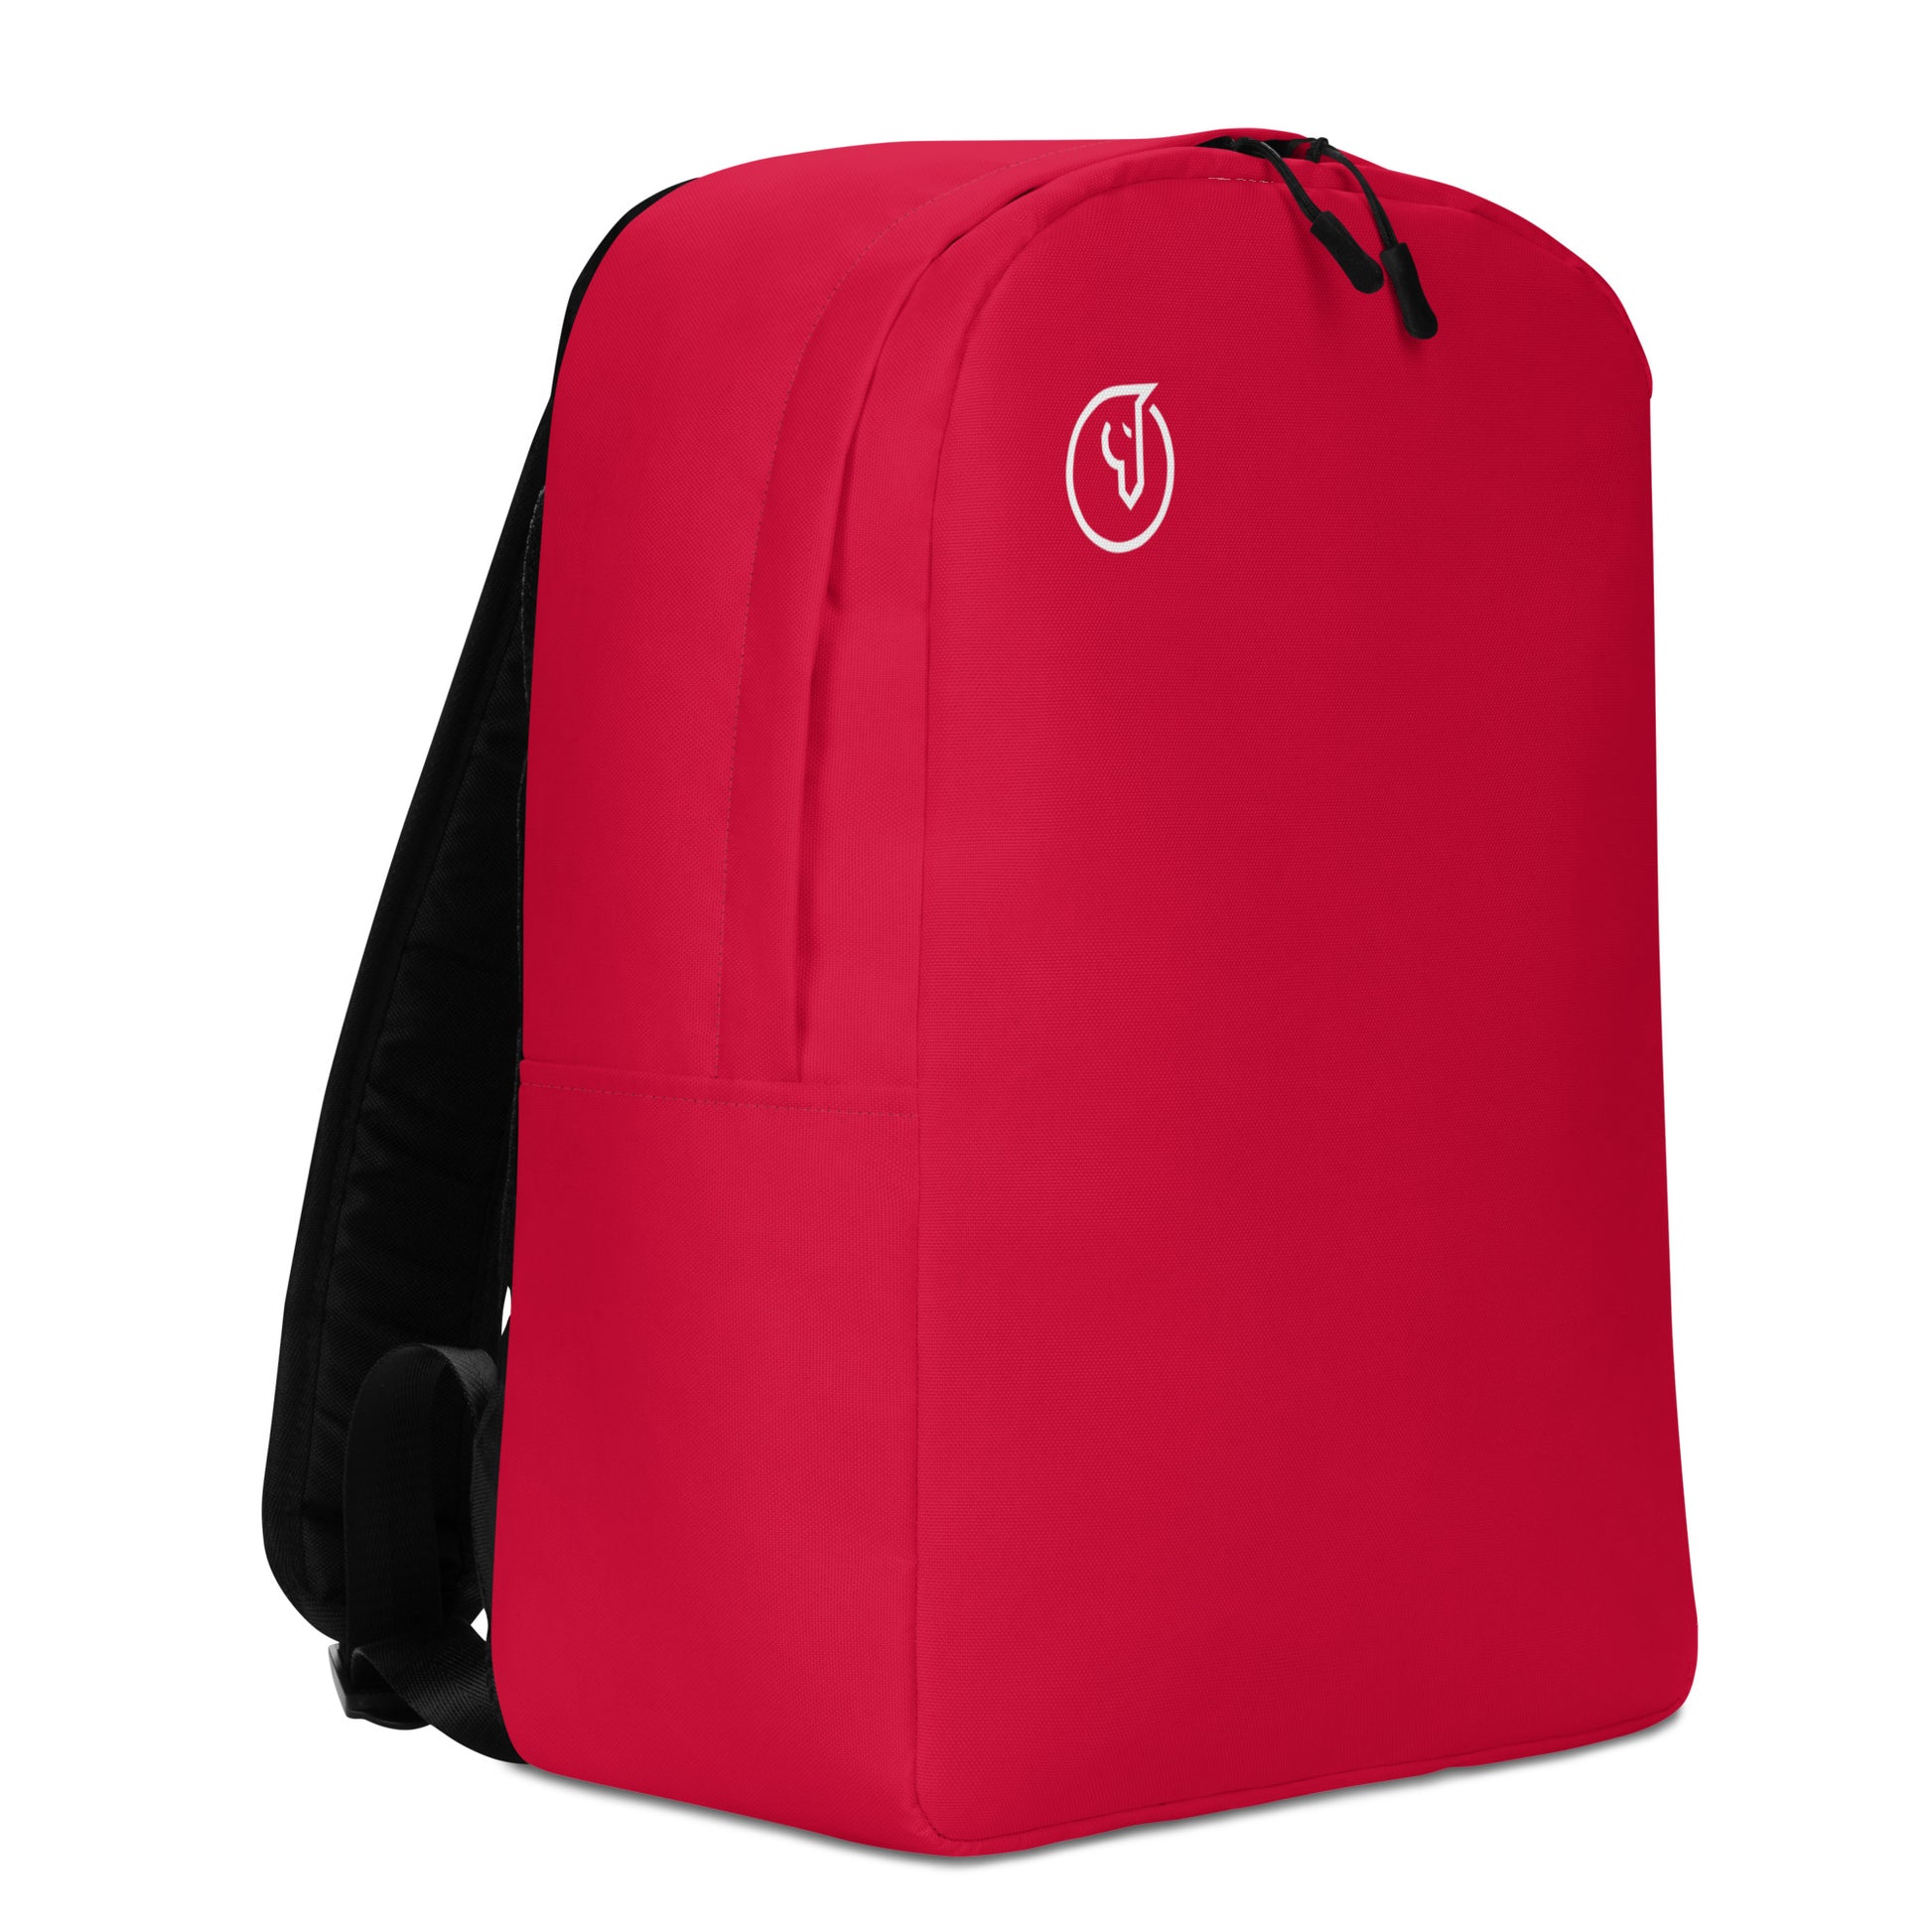 Humble Sportswear, unisex travel backpack waterproof, red backpack